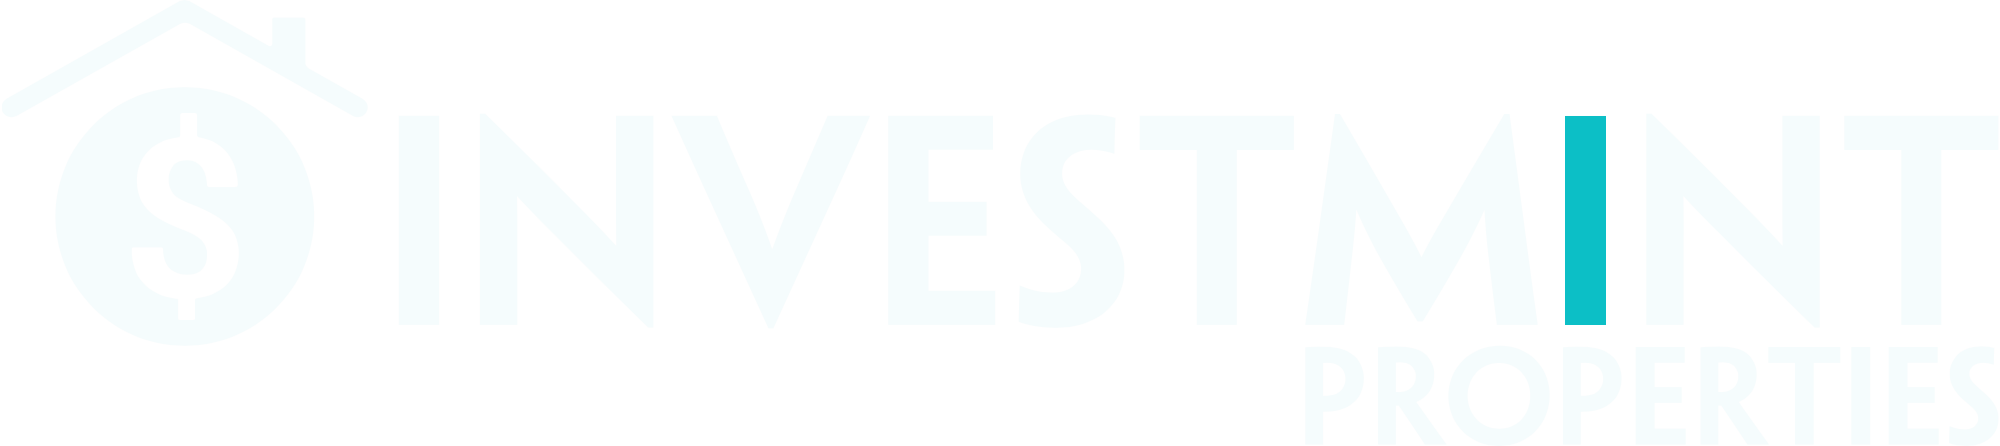 Investment Properties logo